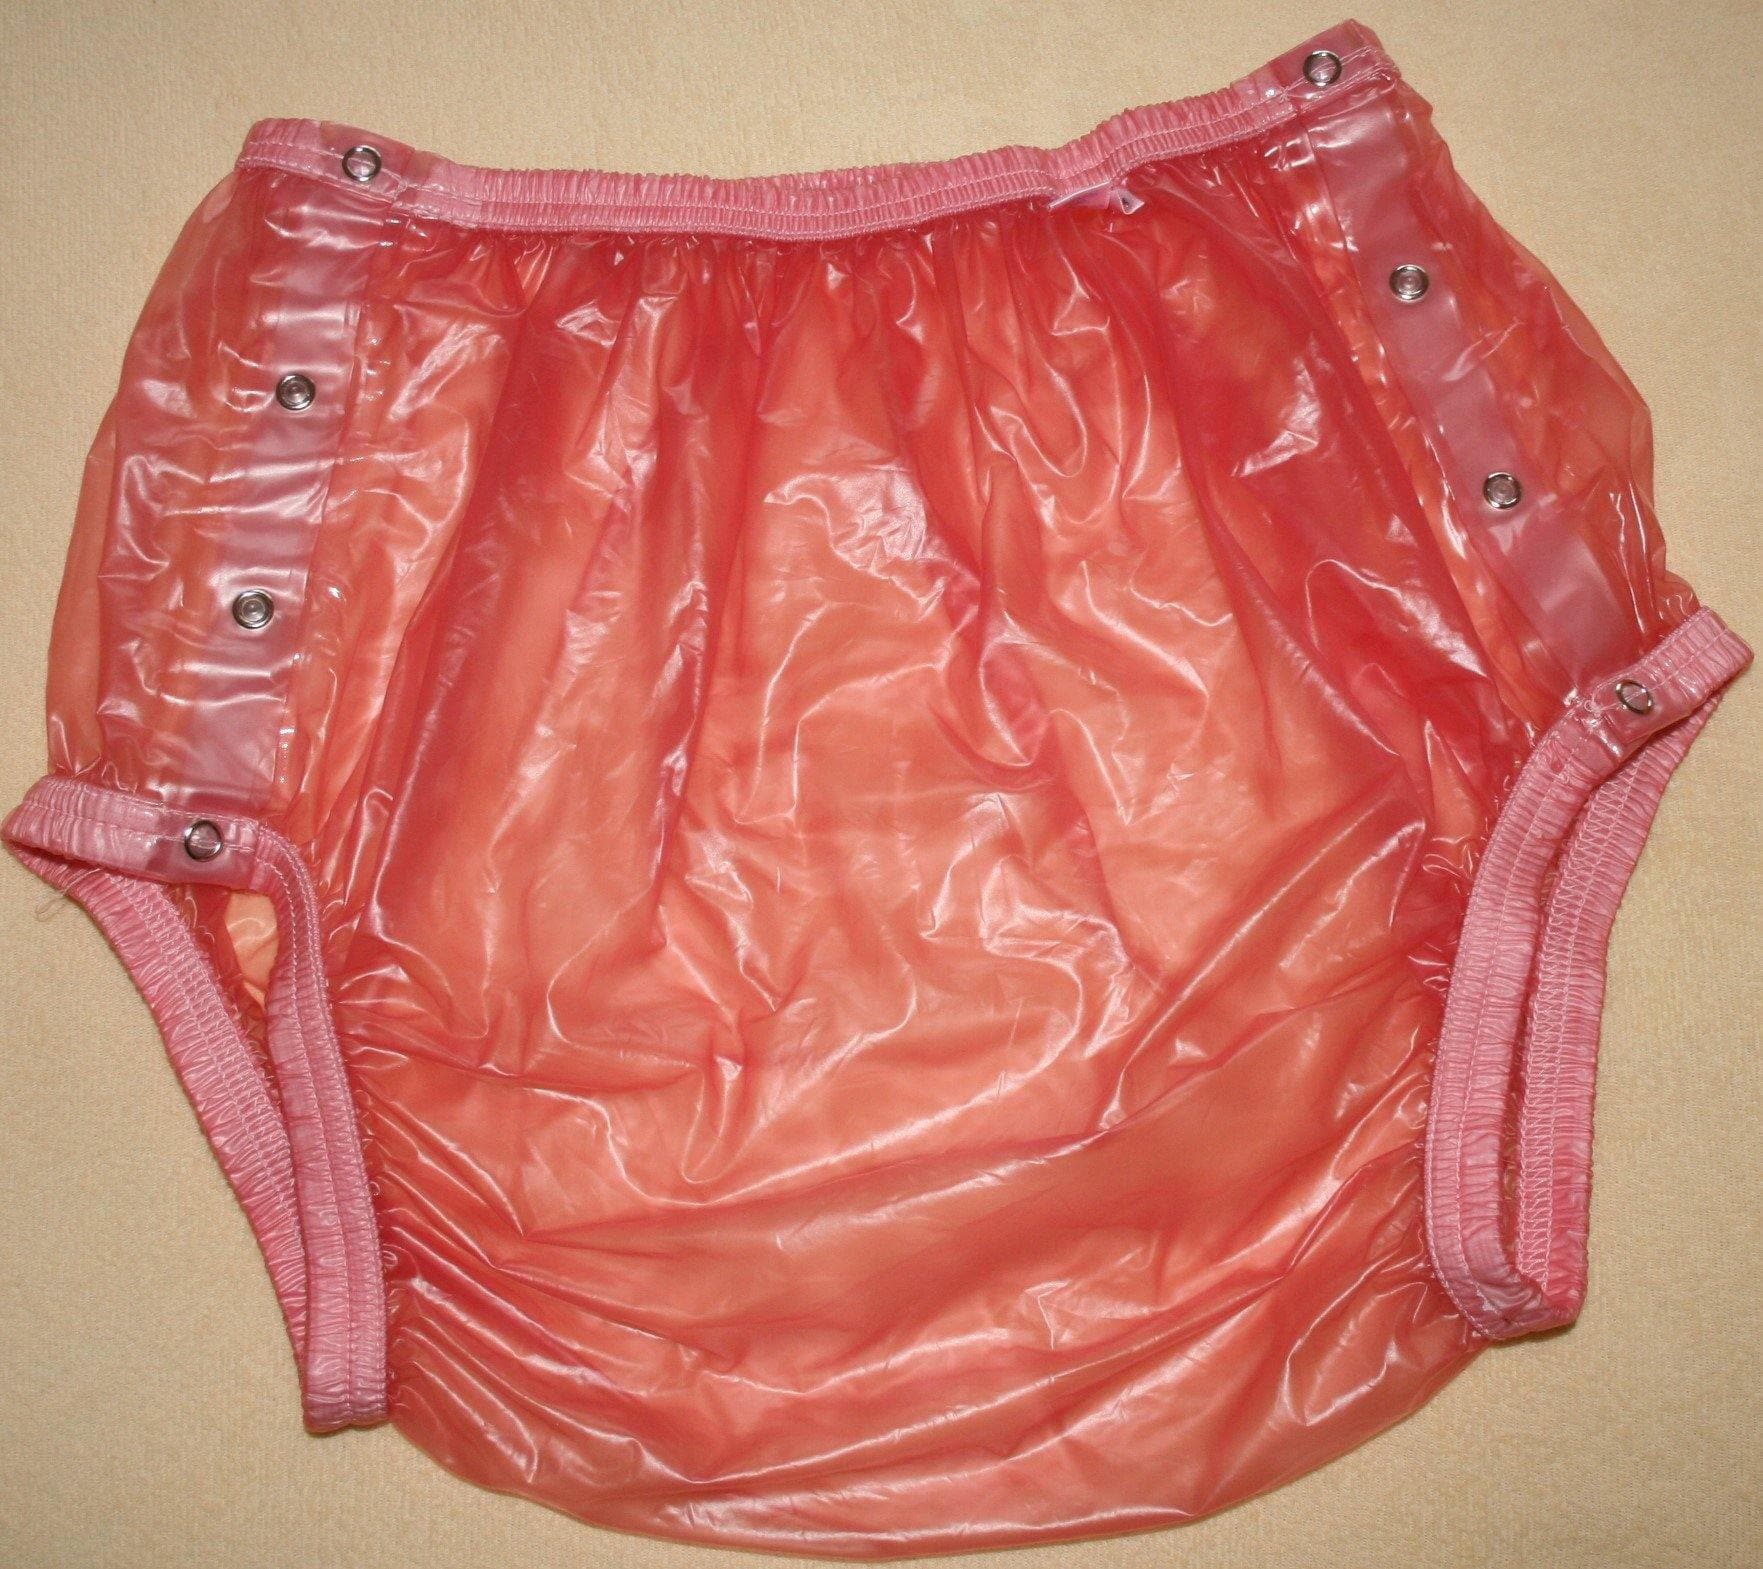 Komfort PVC Knöpfer Windelhose Gummihose rosa transparent